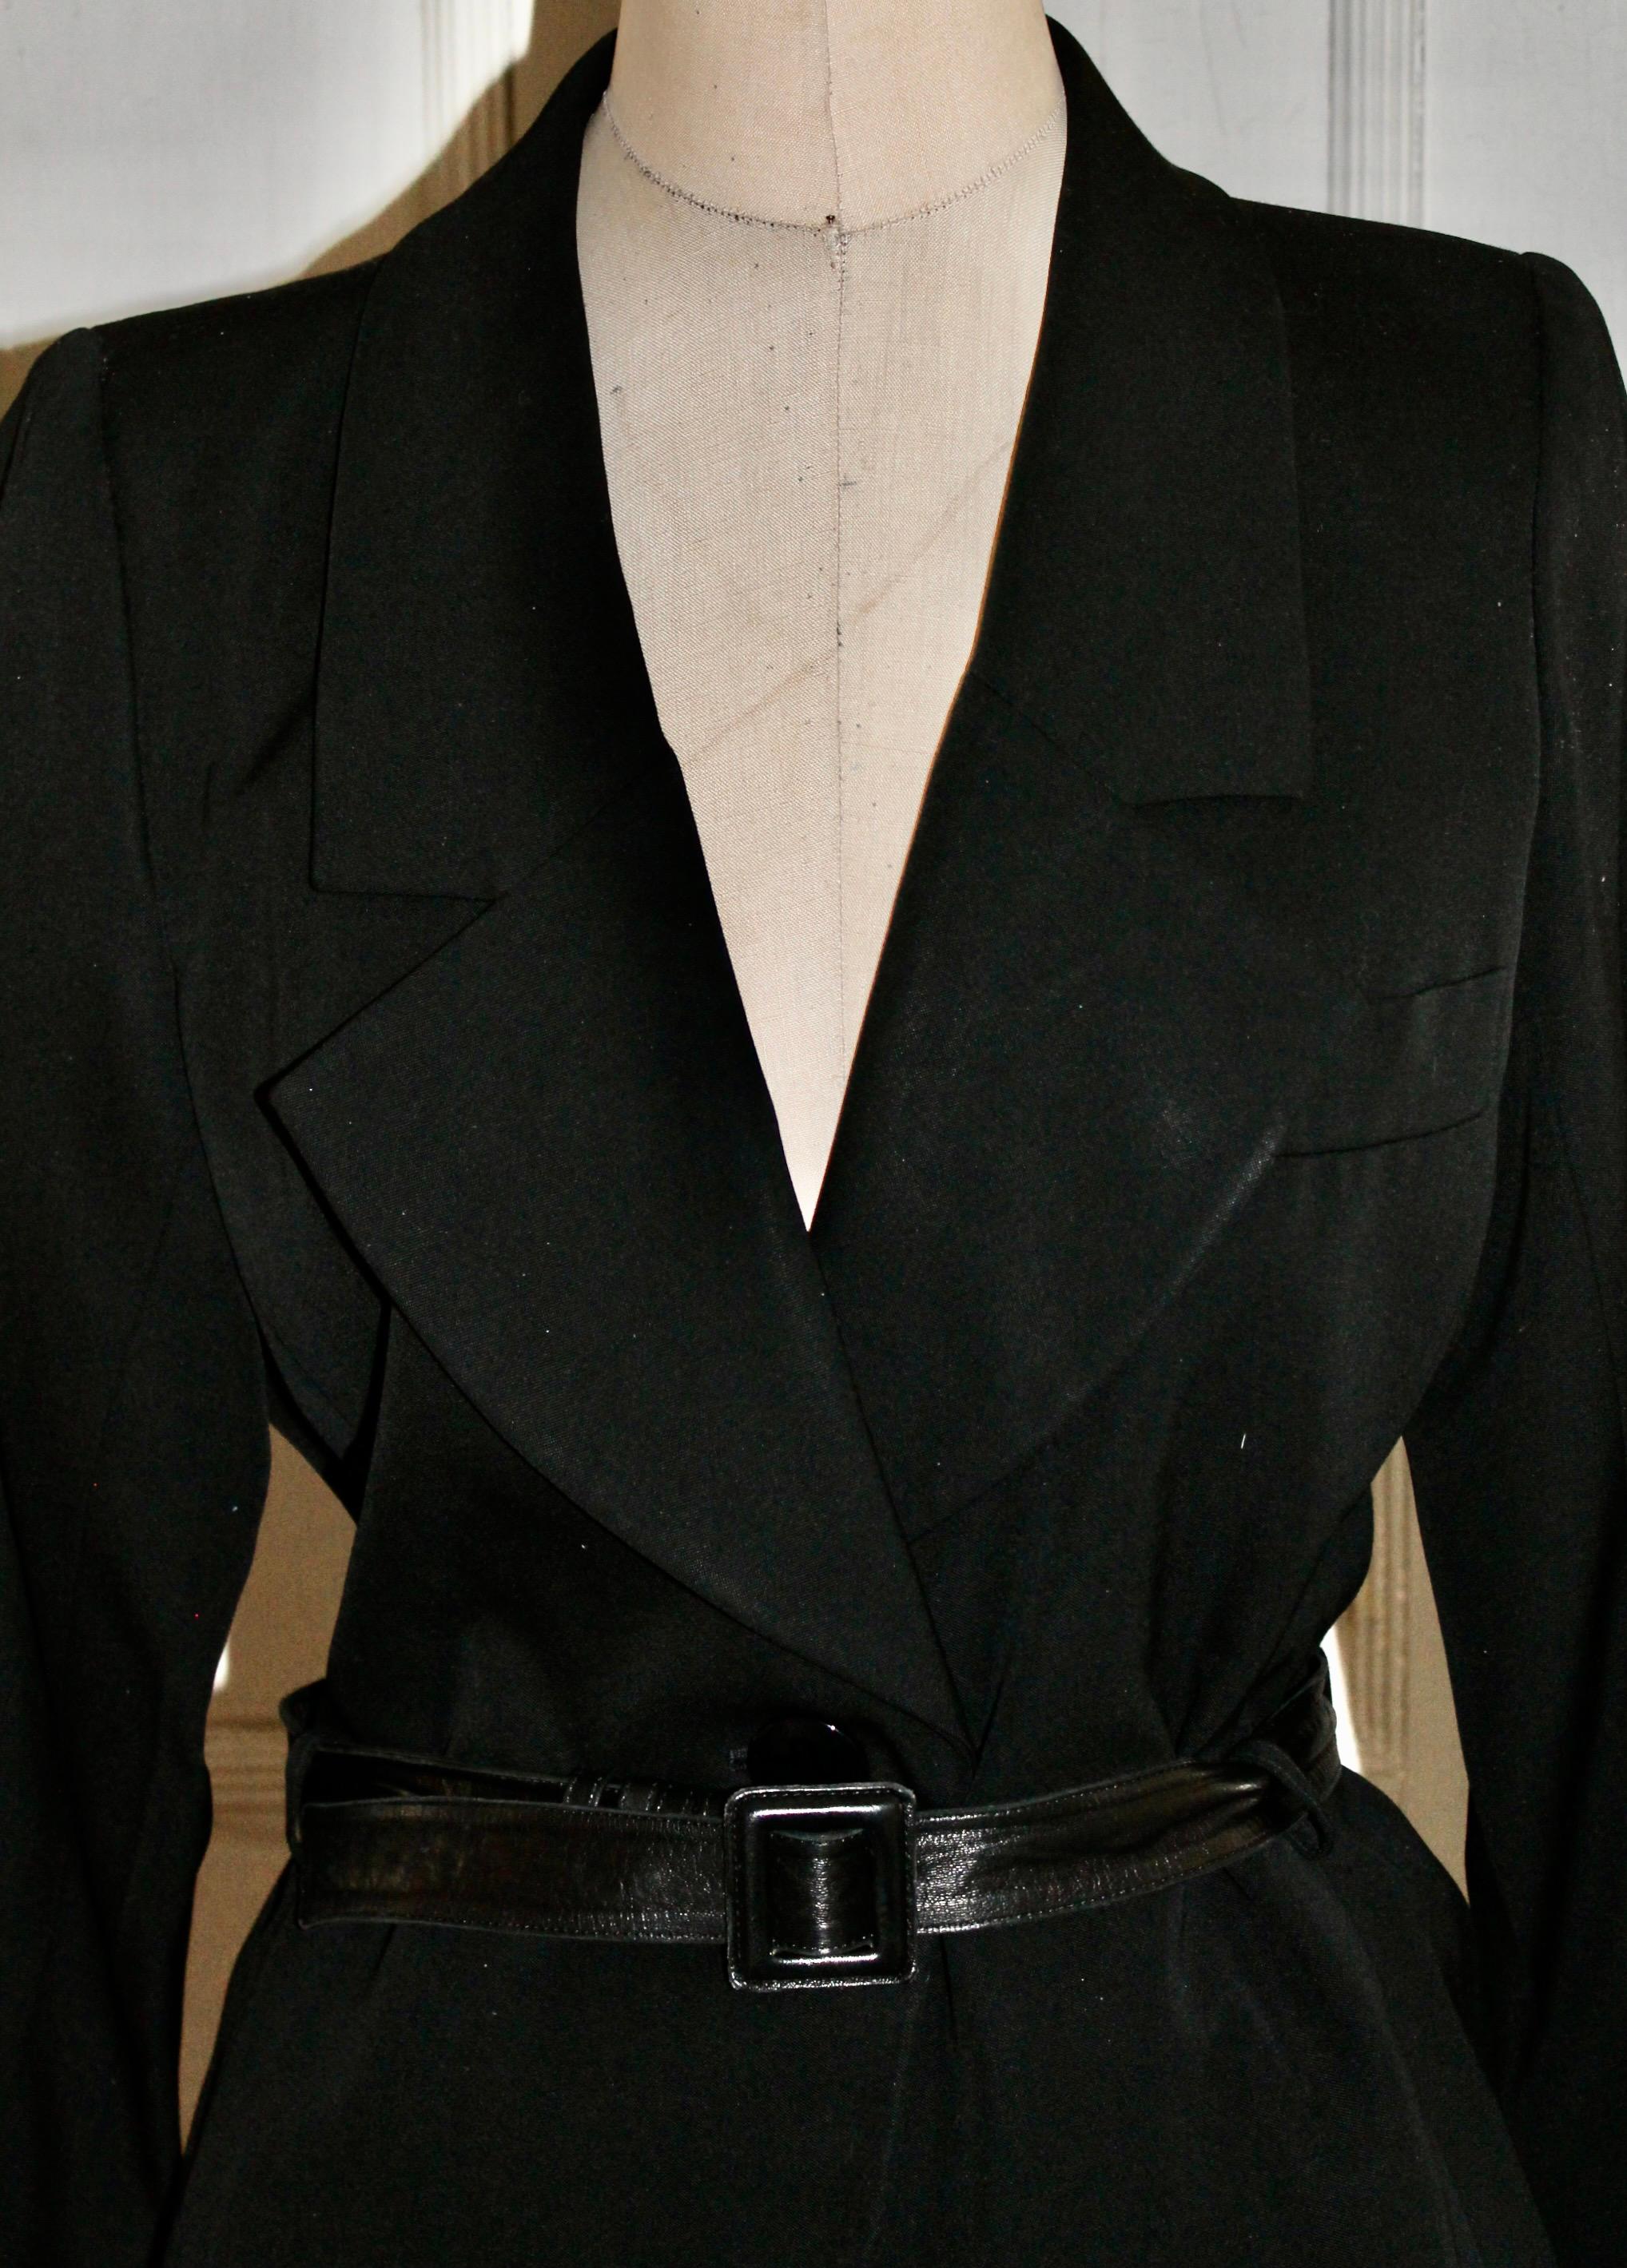 A YSL Rive Gauche 'Tuxedo' style belted black jacket. The belt (38